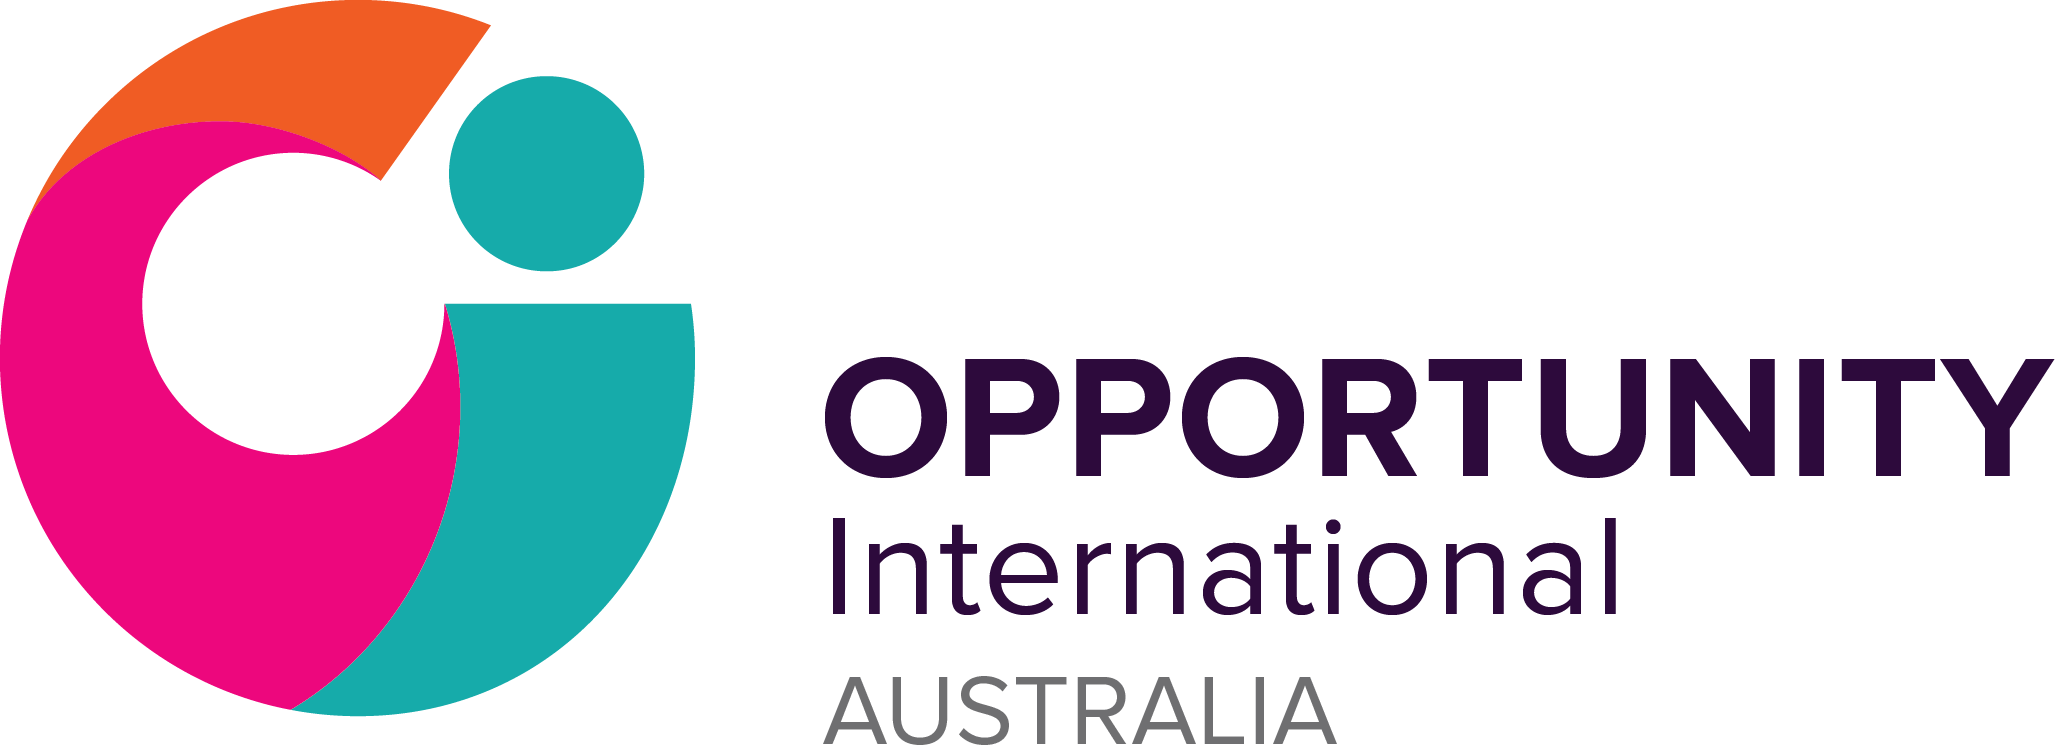 Opportunity International Australia - Opportunity International (2055x745)